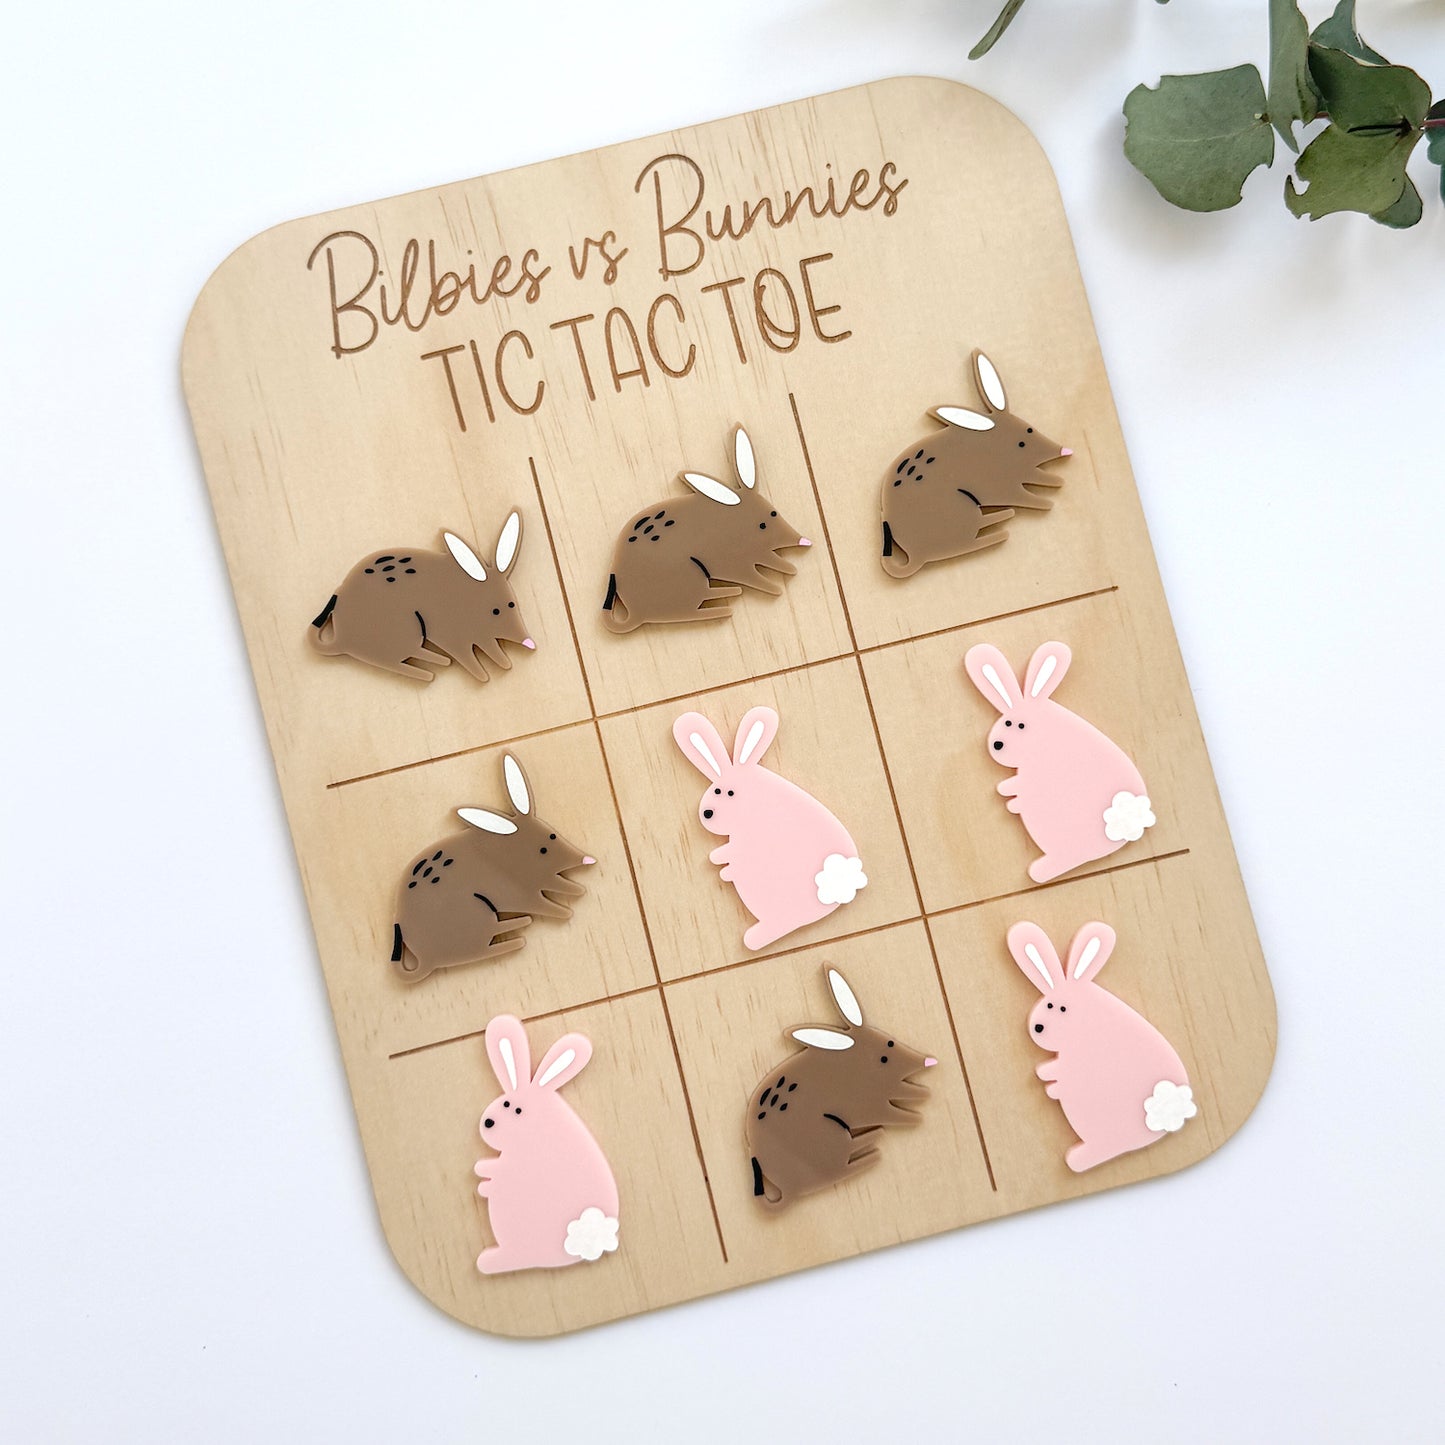 Easter Tic-Tac-Toe - Bilbies vs Bunnies-Bandicute